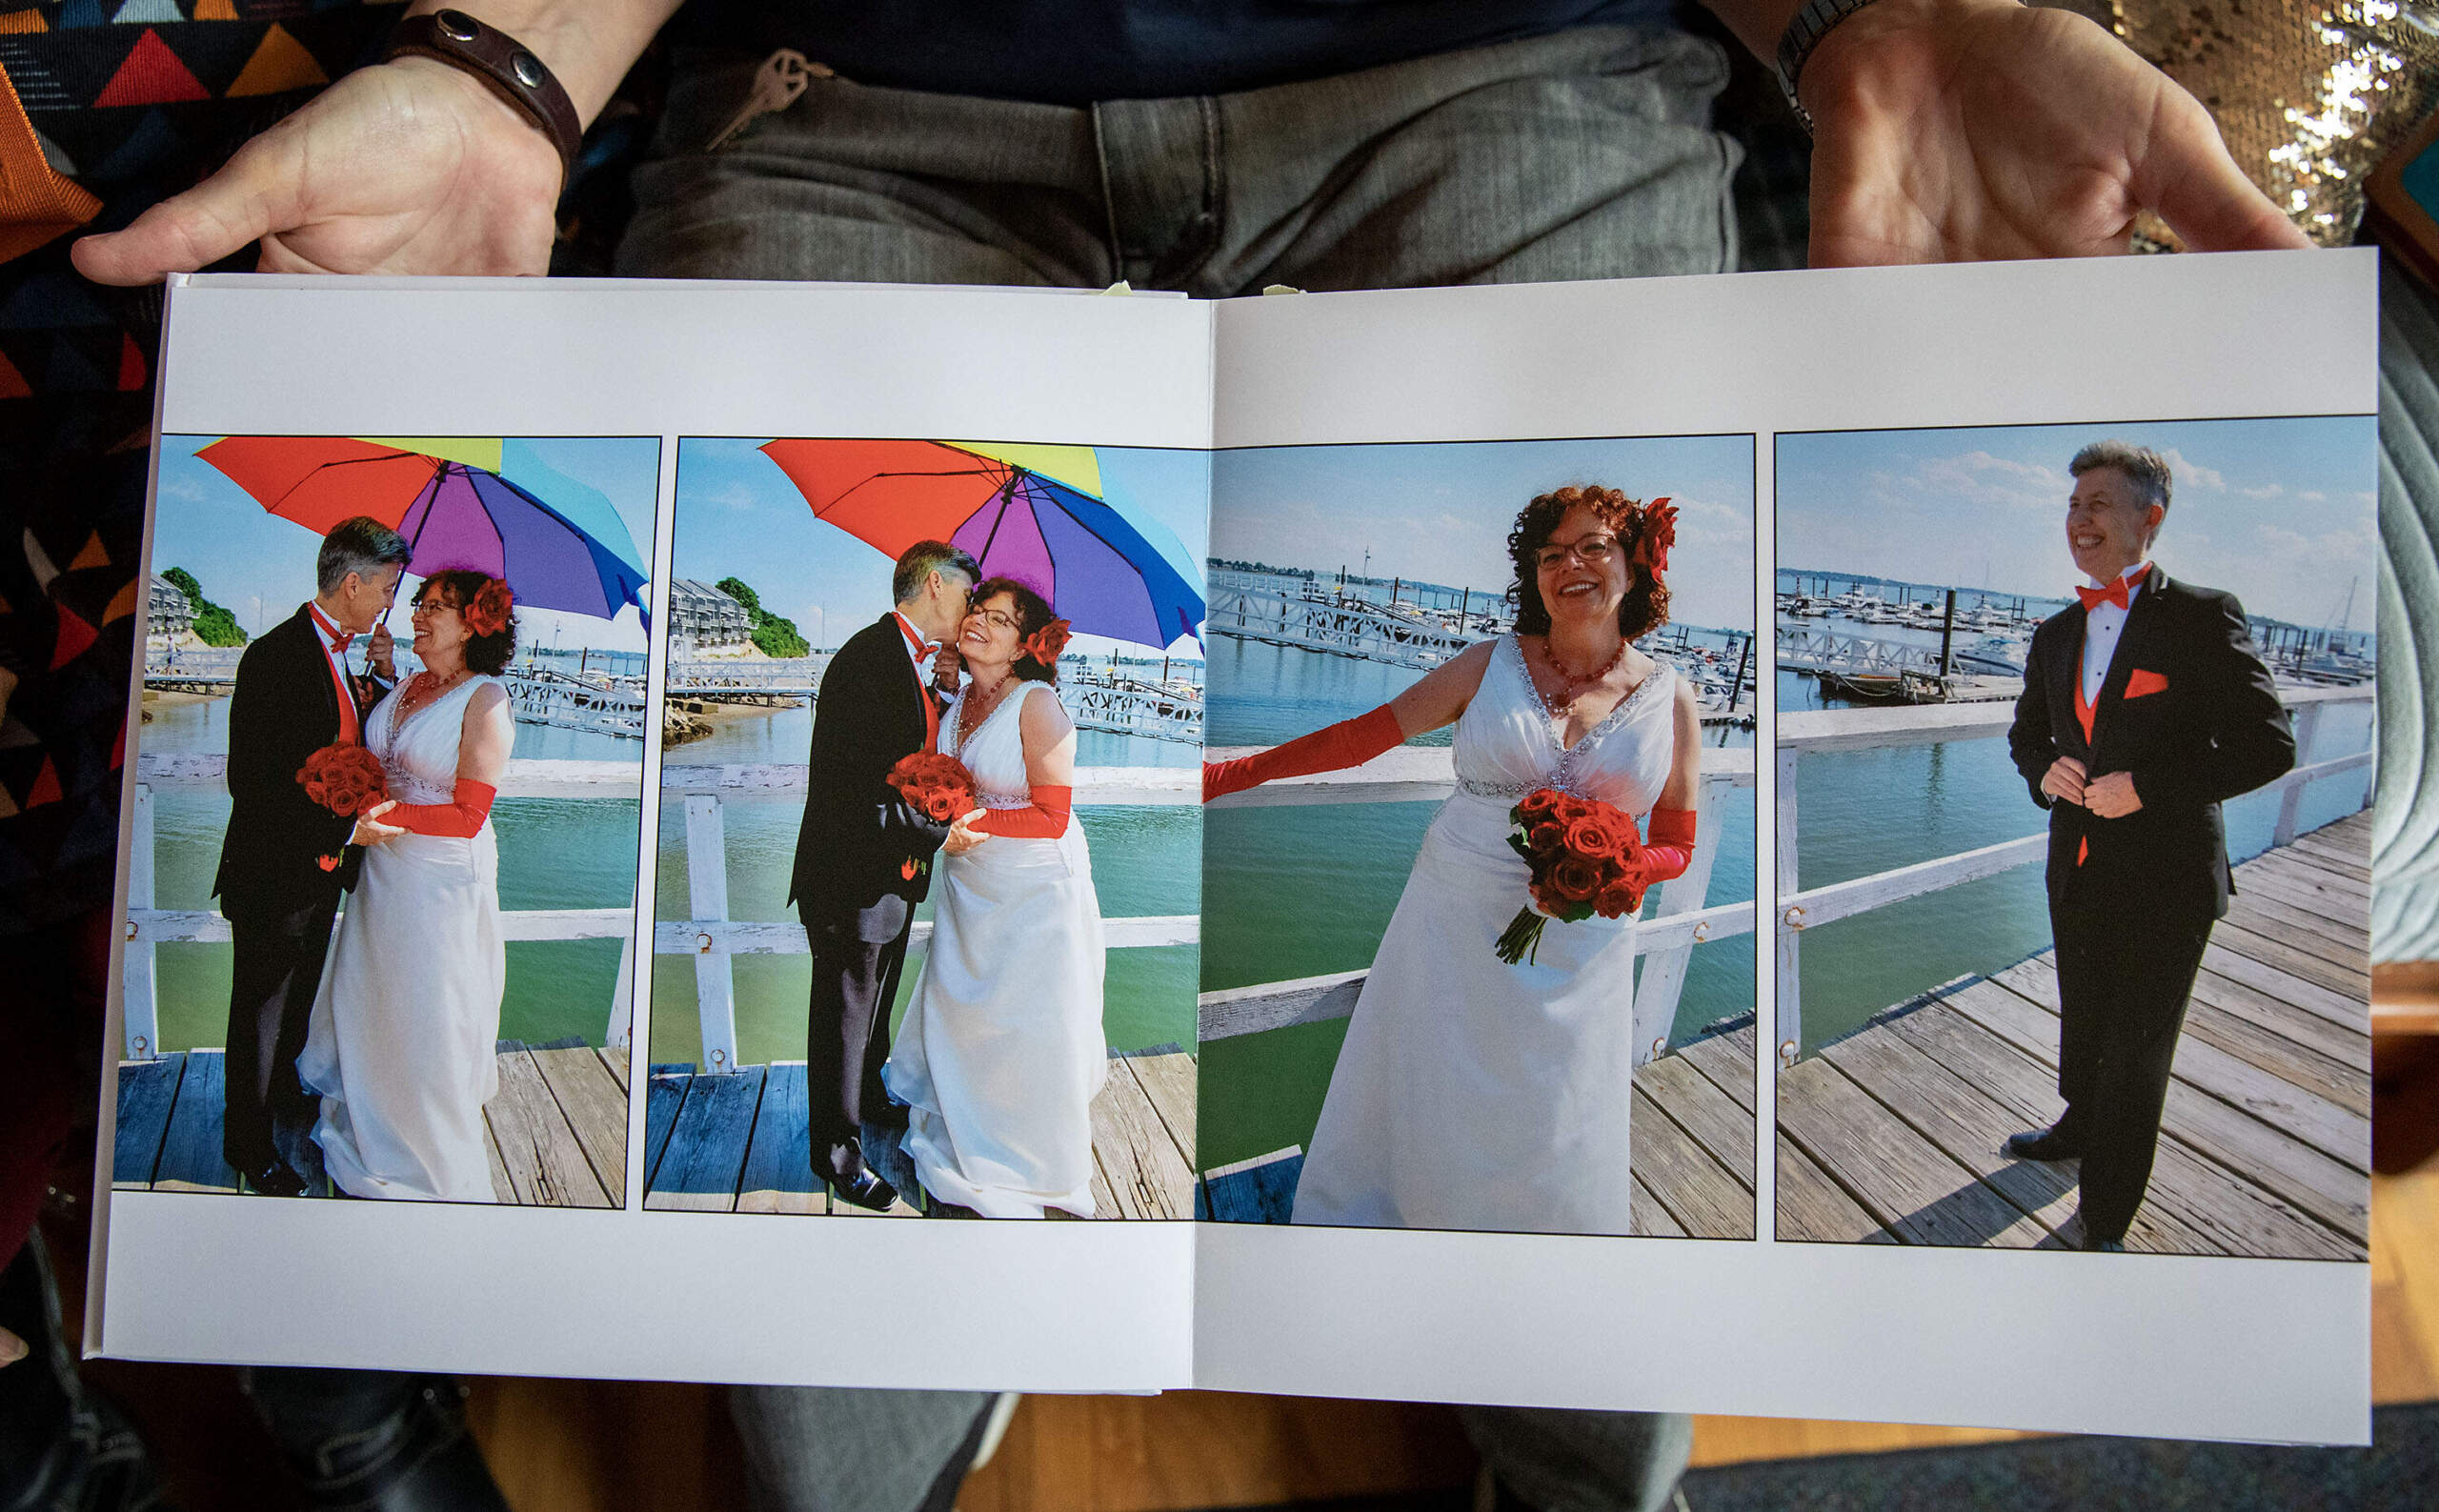 Liz Nania and Sandy Bailey's photo book from their wedding day. (Robin Lubbock/WBUR)